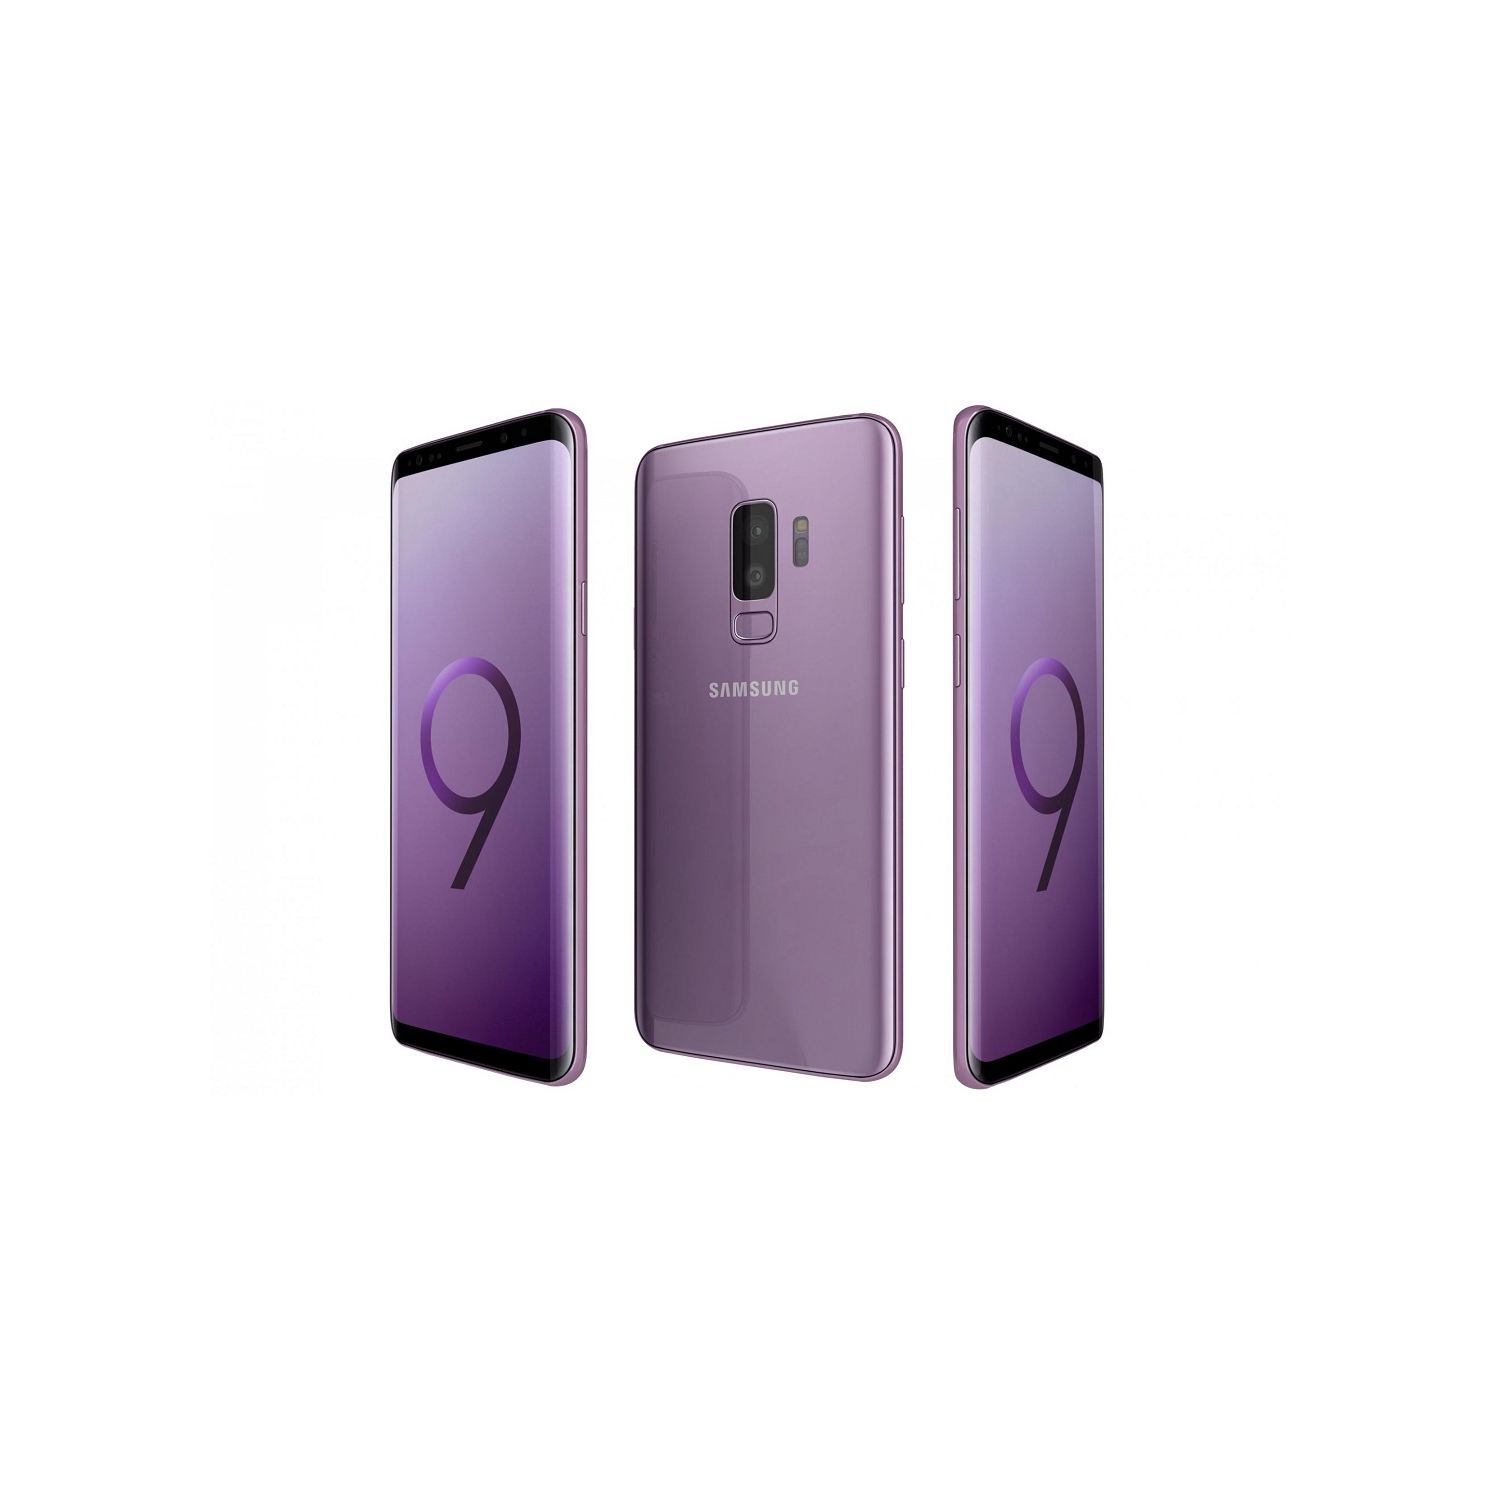 Samsung Galaxy S9+ 64GB Smartphone - Lilac Purple - Unlocked - Open Box